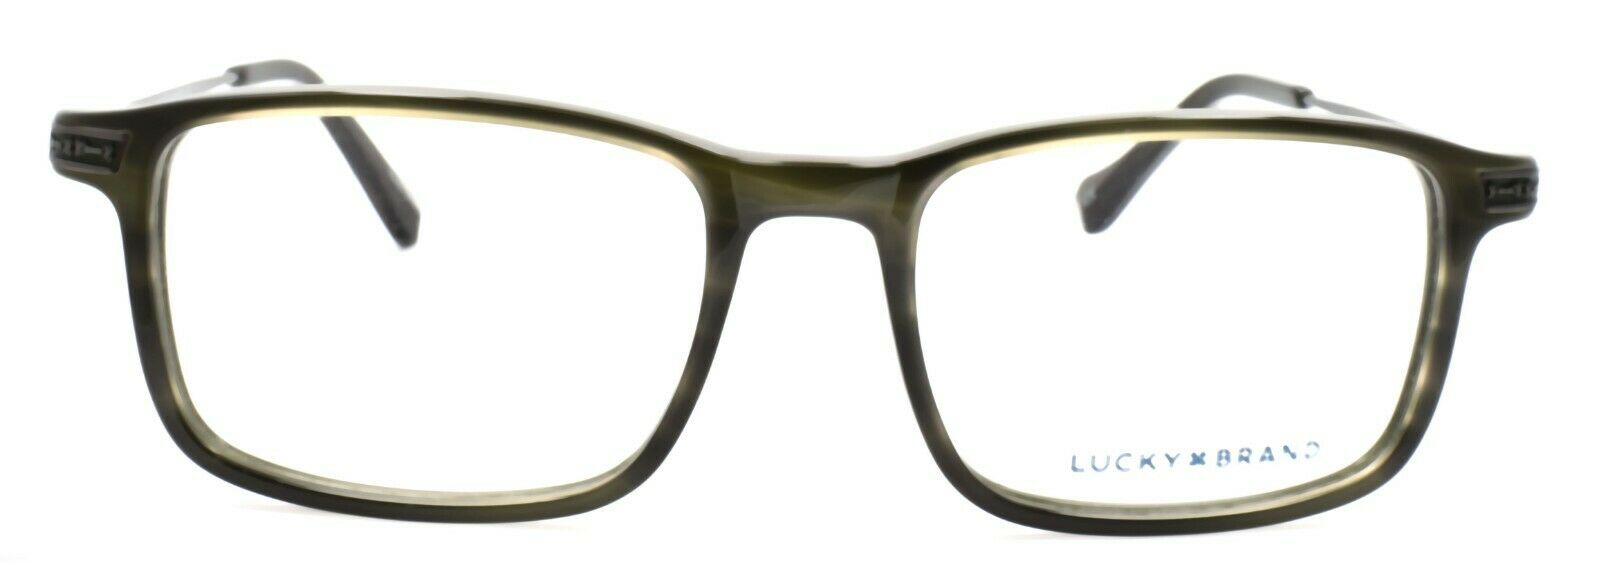 2-LUCKY BRAND D402 Men's Eyeglasses Frames 51-18-140 Olive + CASE-751286281903-IKSpecs